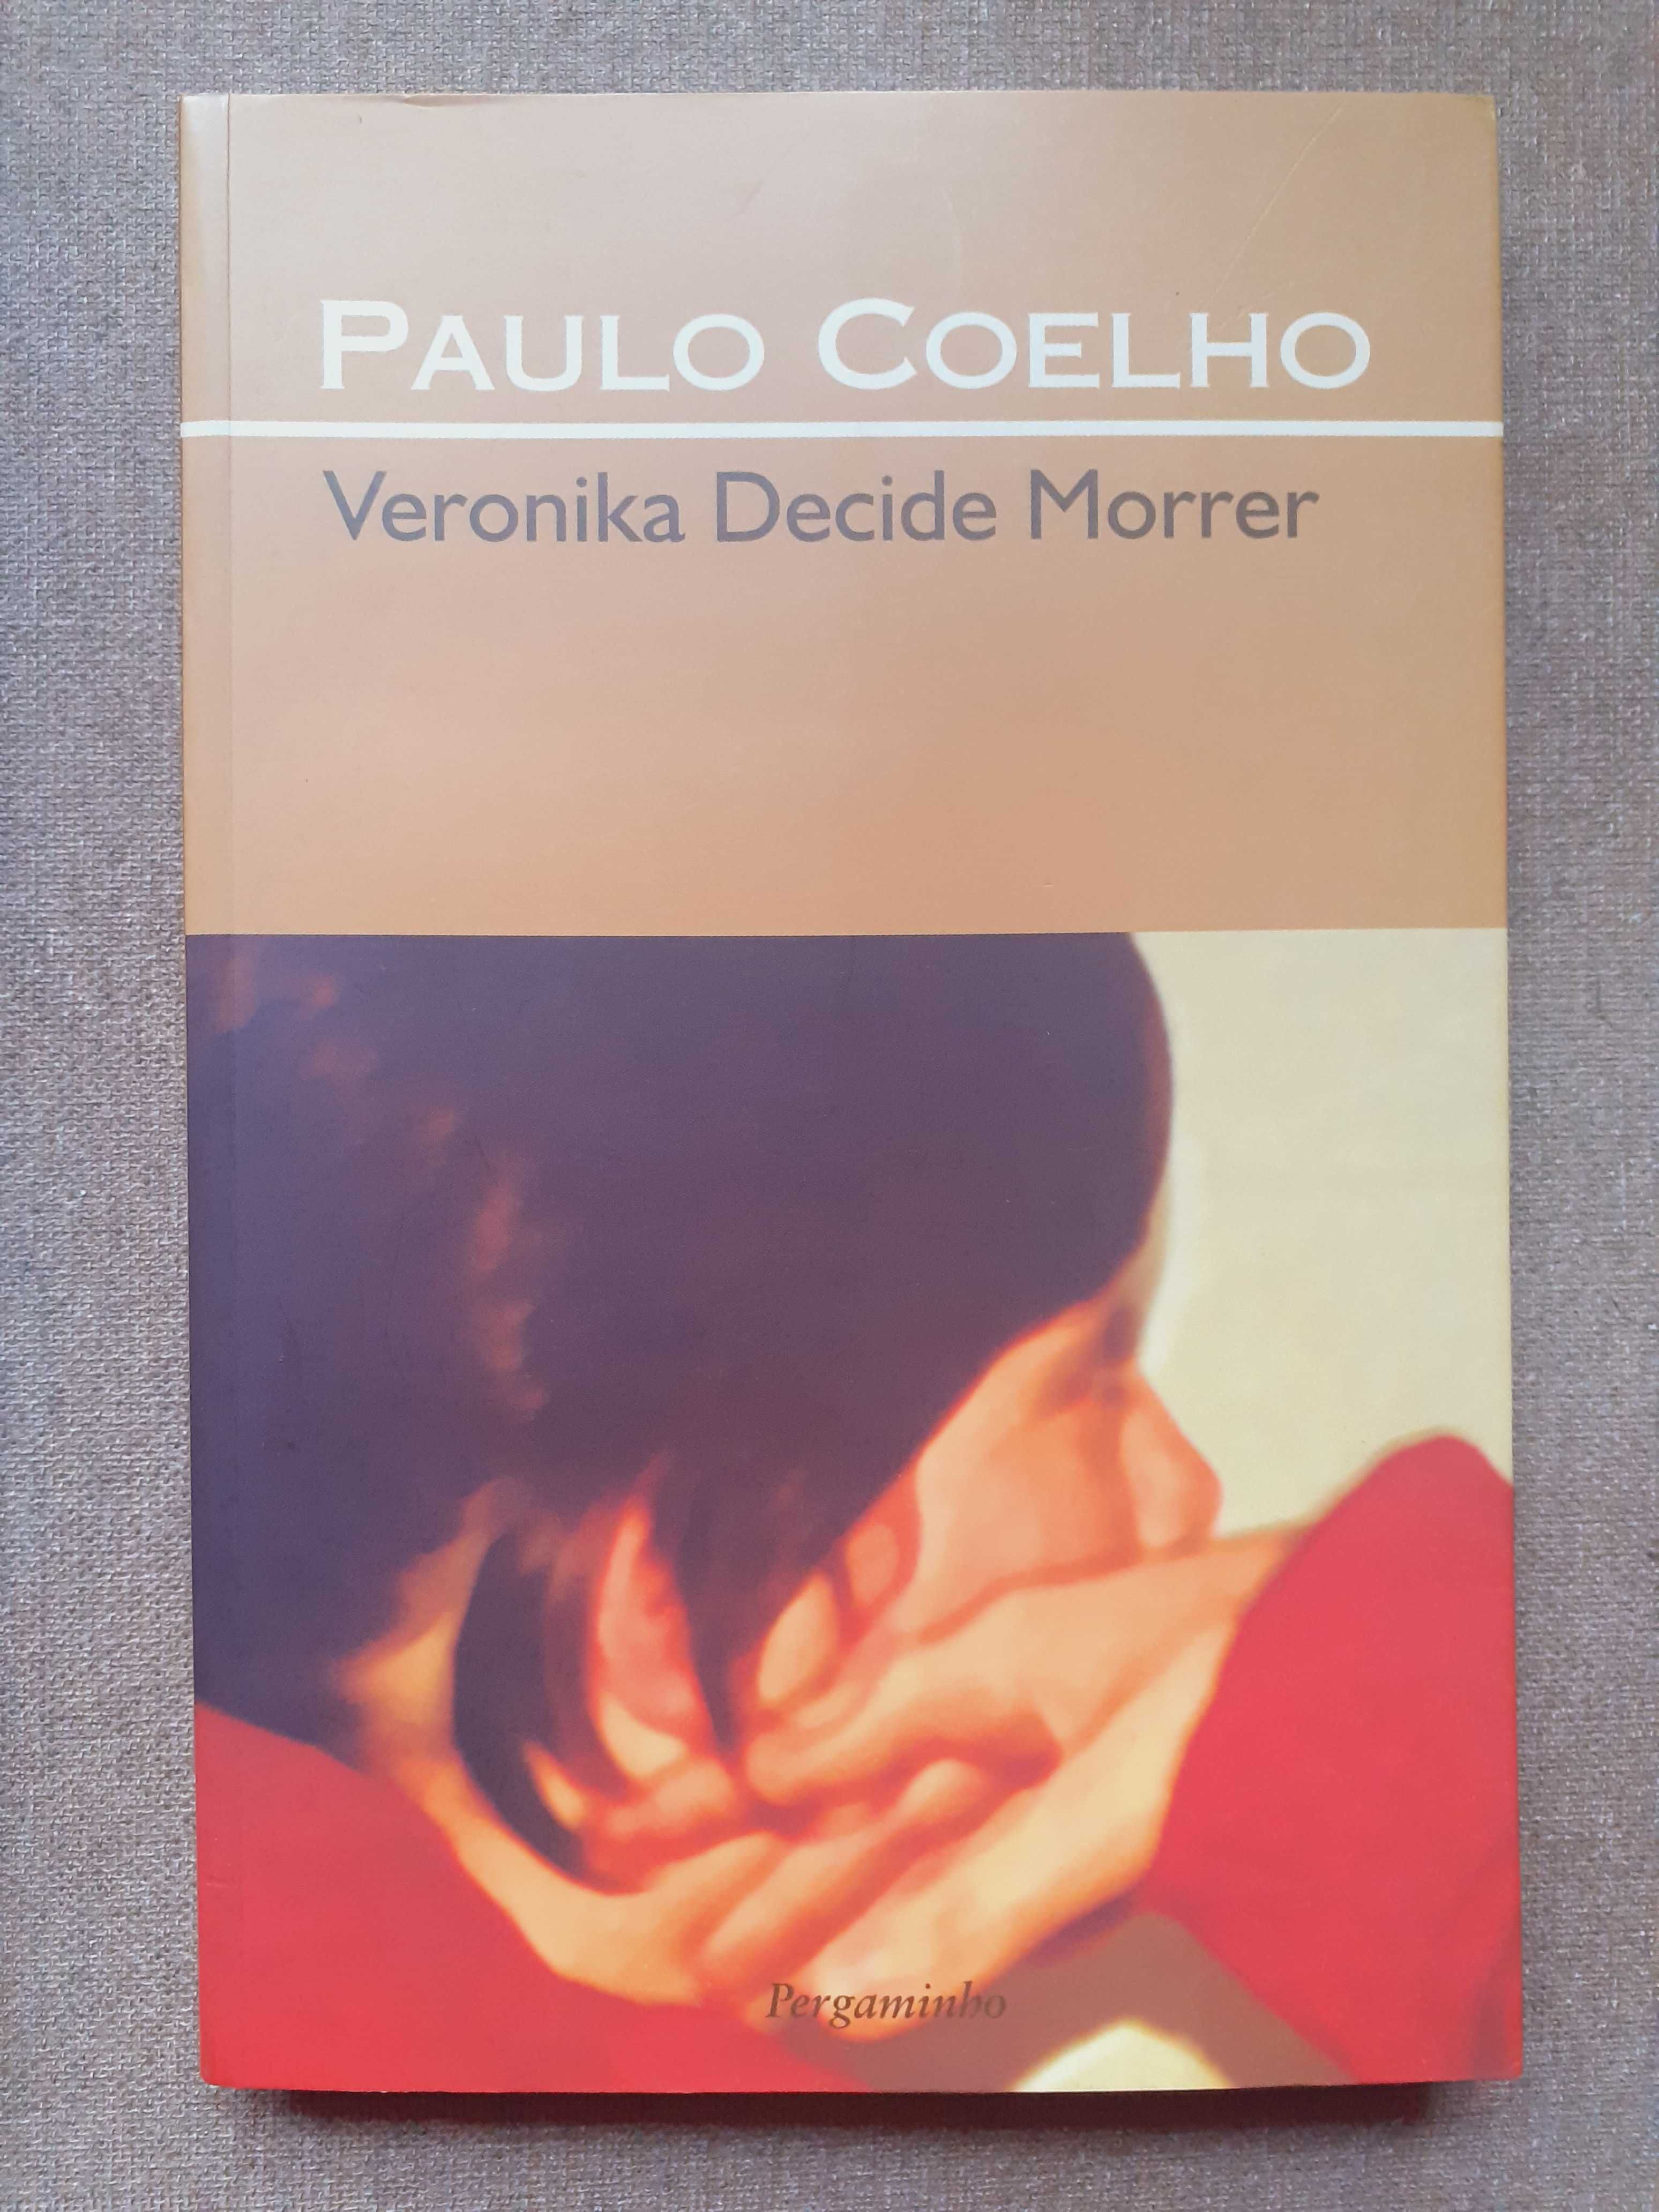 Paulo Coelho livros